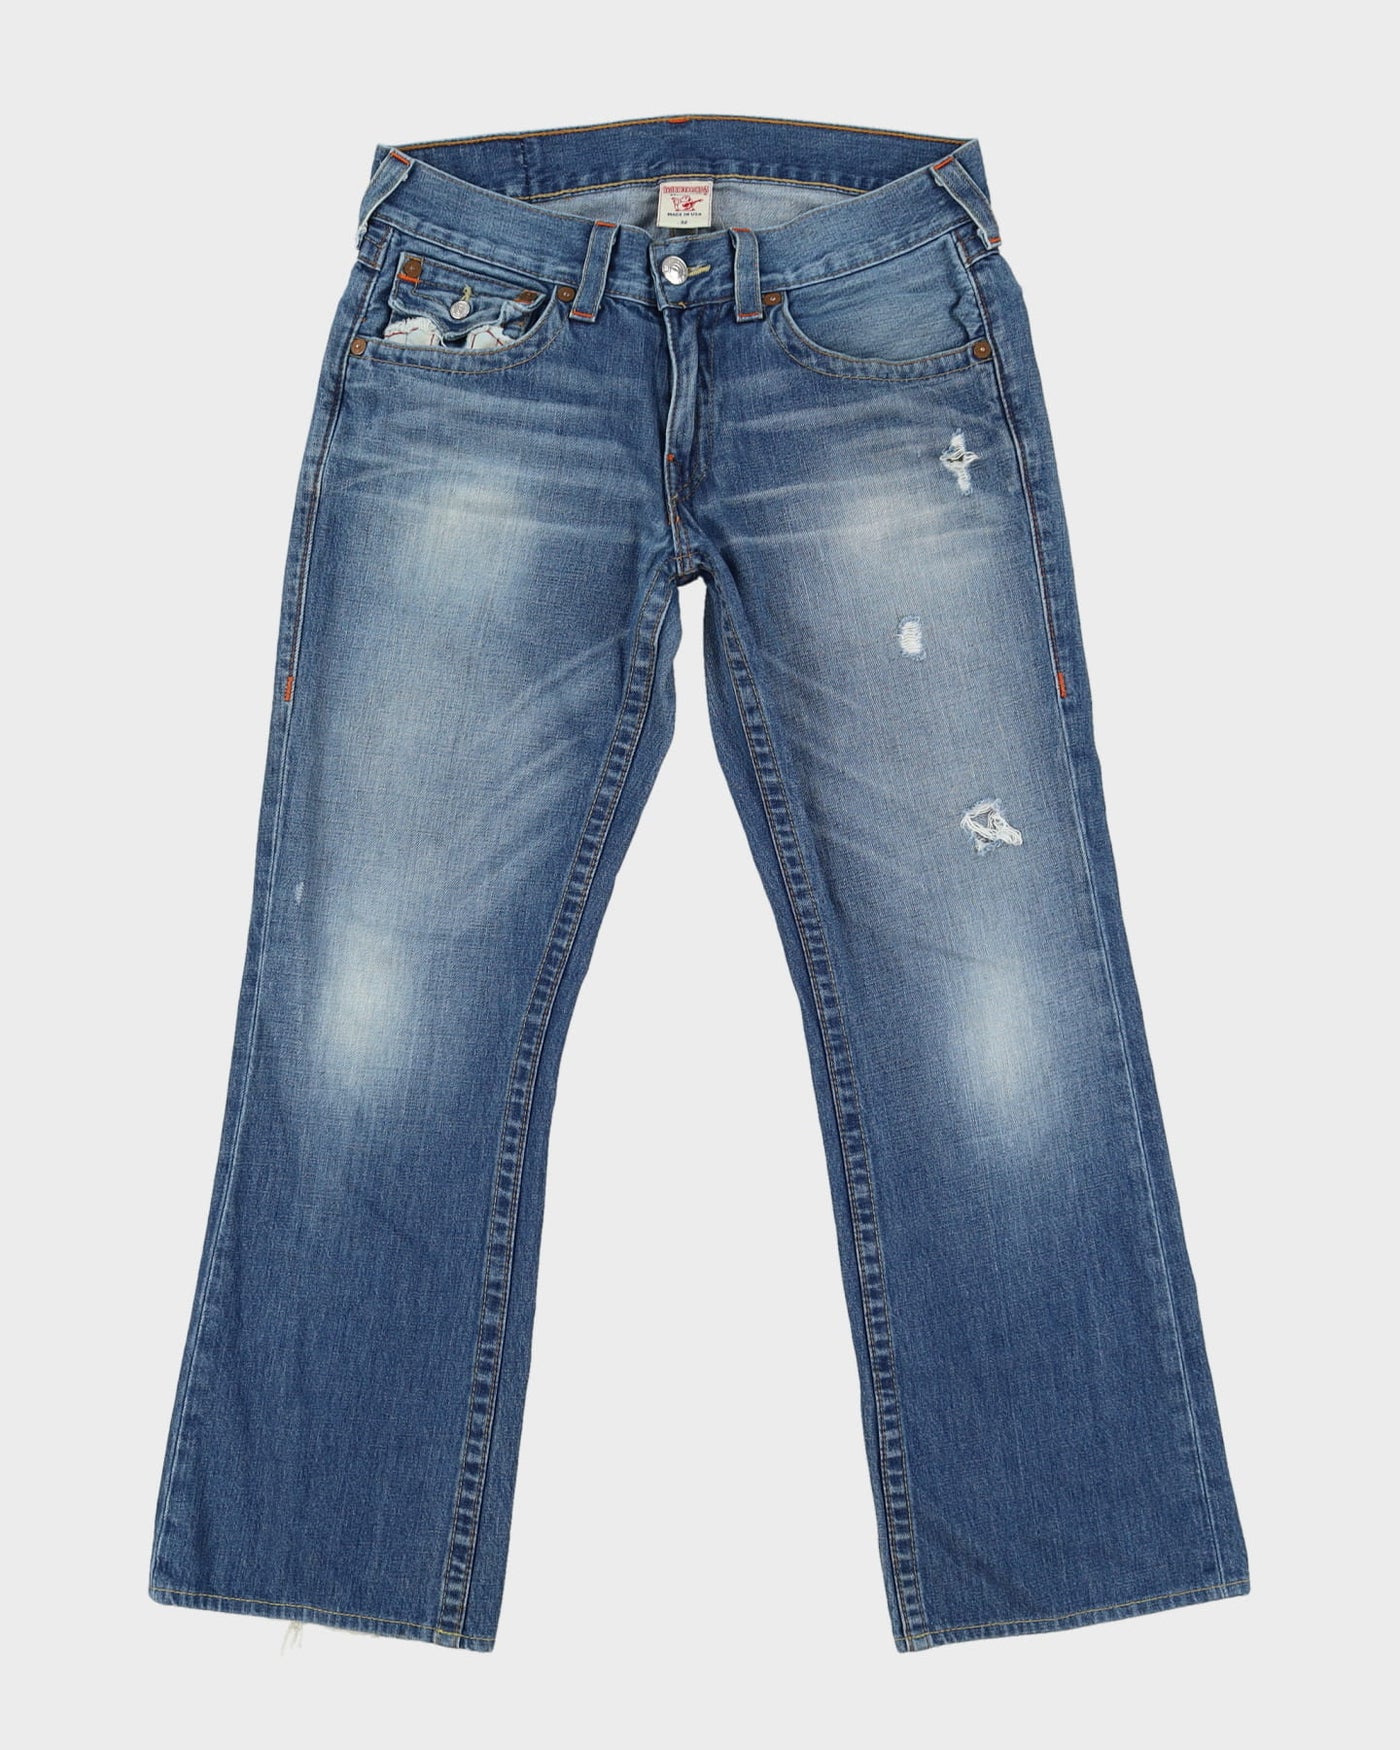 00s True Religion Contrast Stitch Dark Wash Blue Jeans - W32 L30